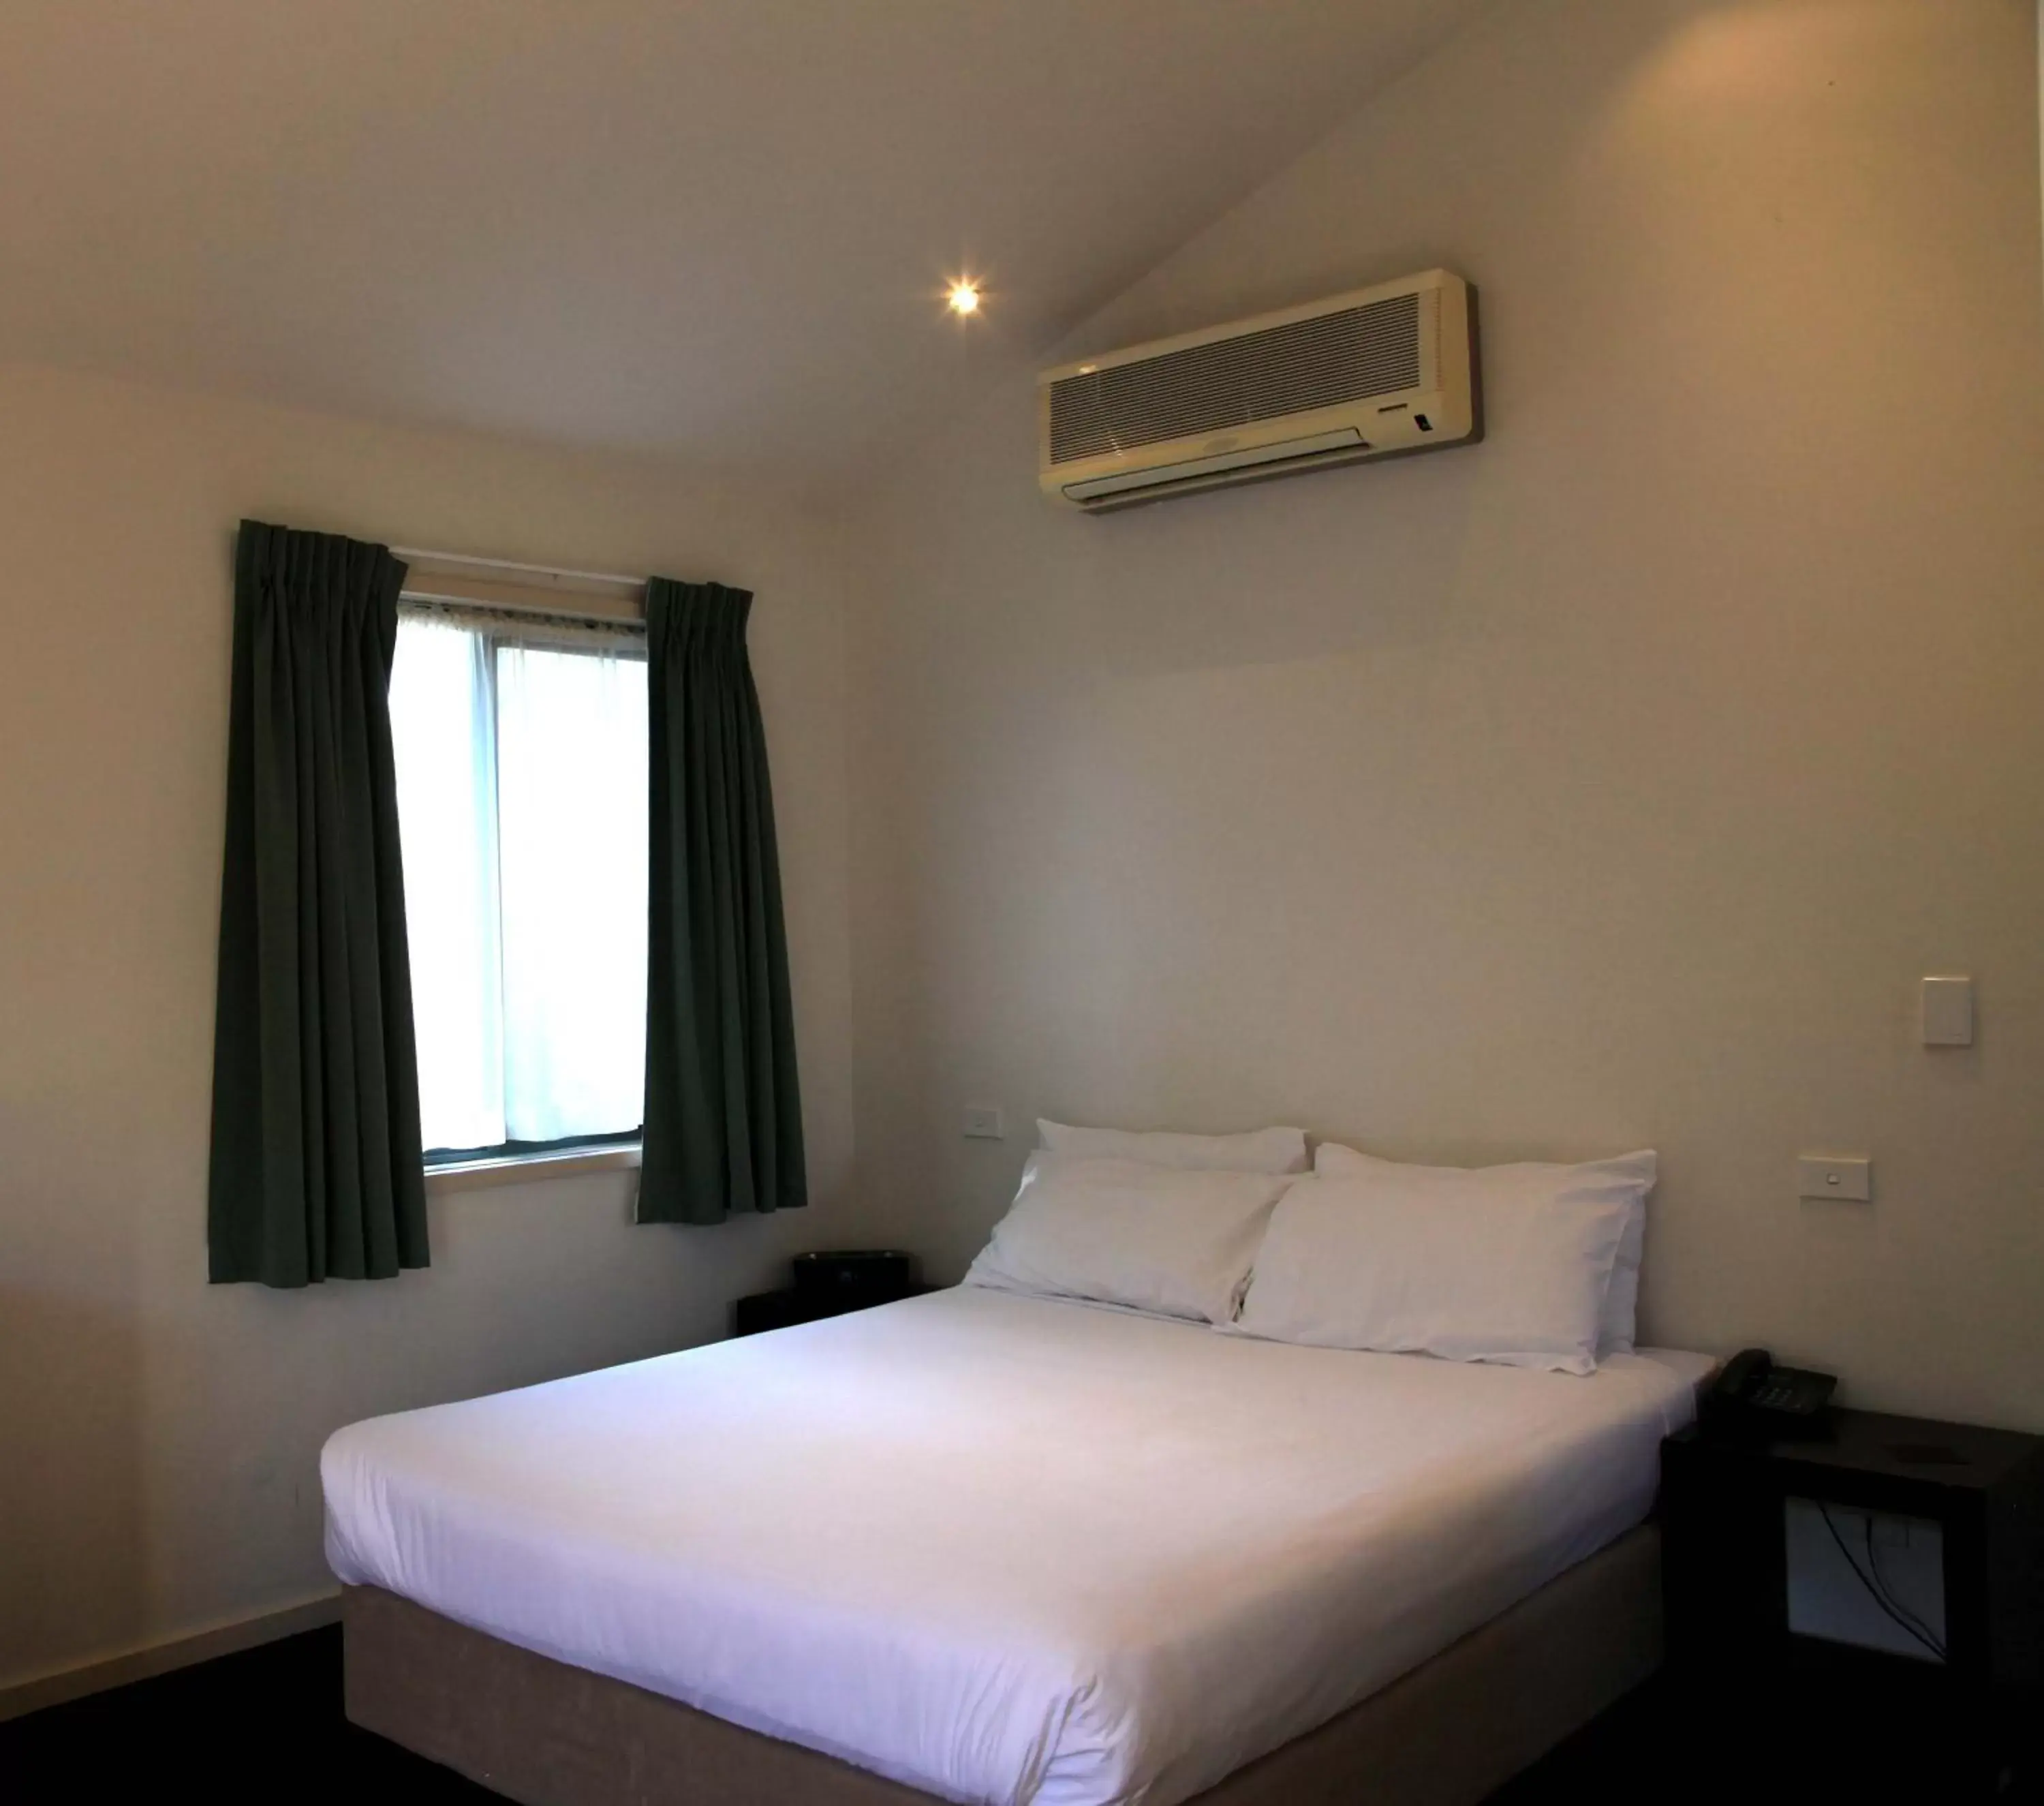 Bed, Room Photo in Travellers Motor Village